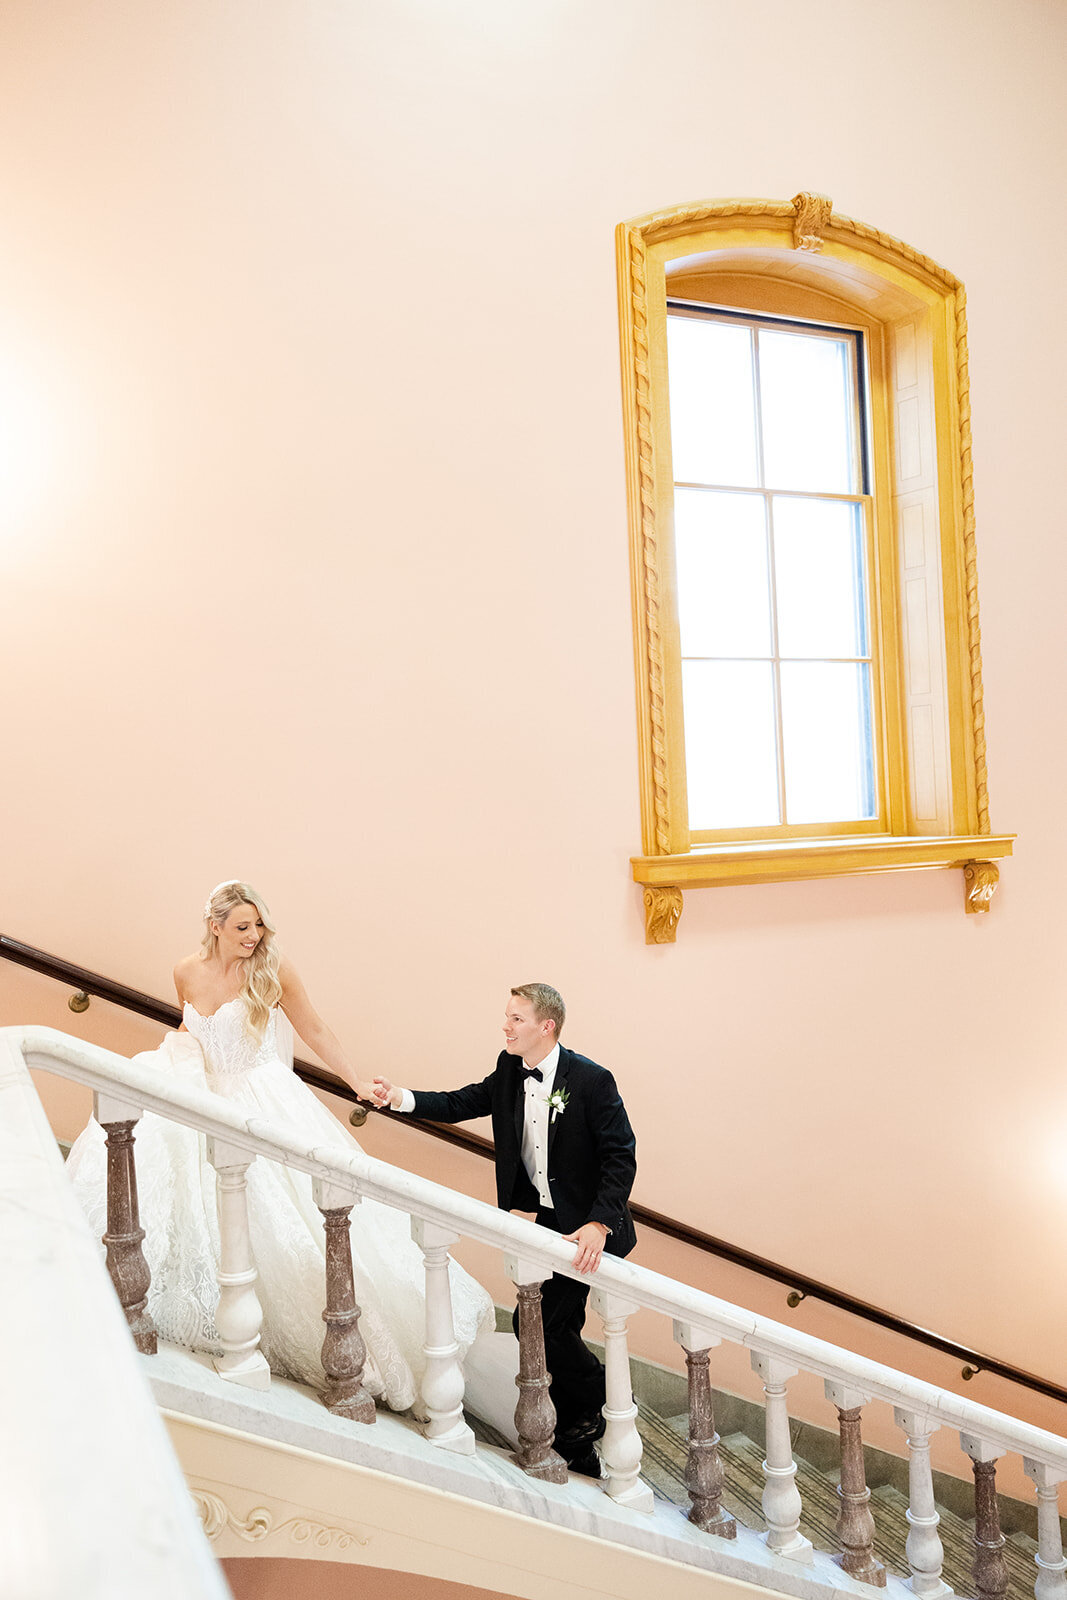 the-cannons-photography-lindsey-and-jon-columbus-ohio-wedding-photographer-505_websize (1)